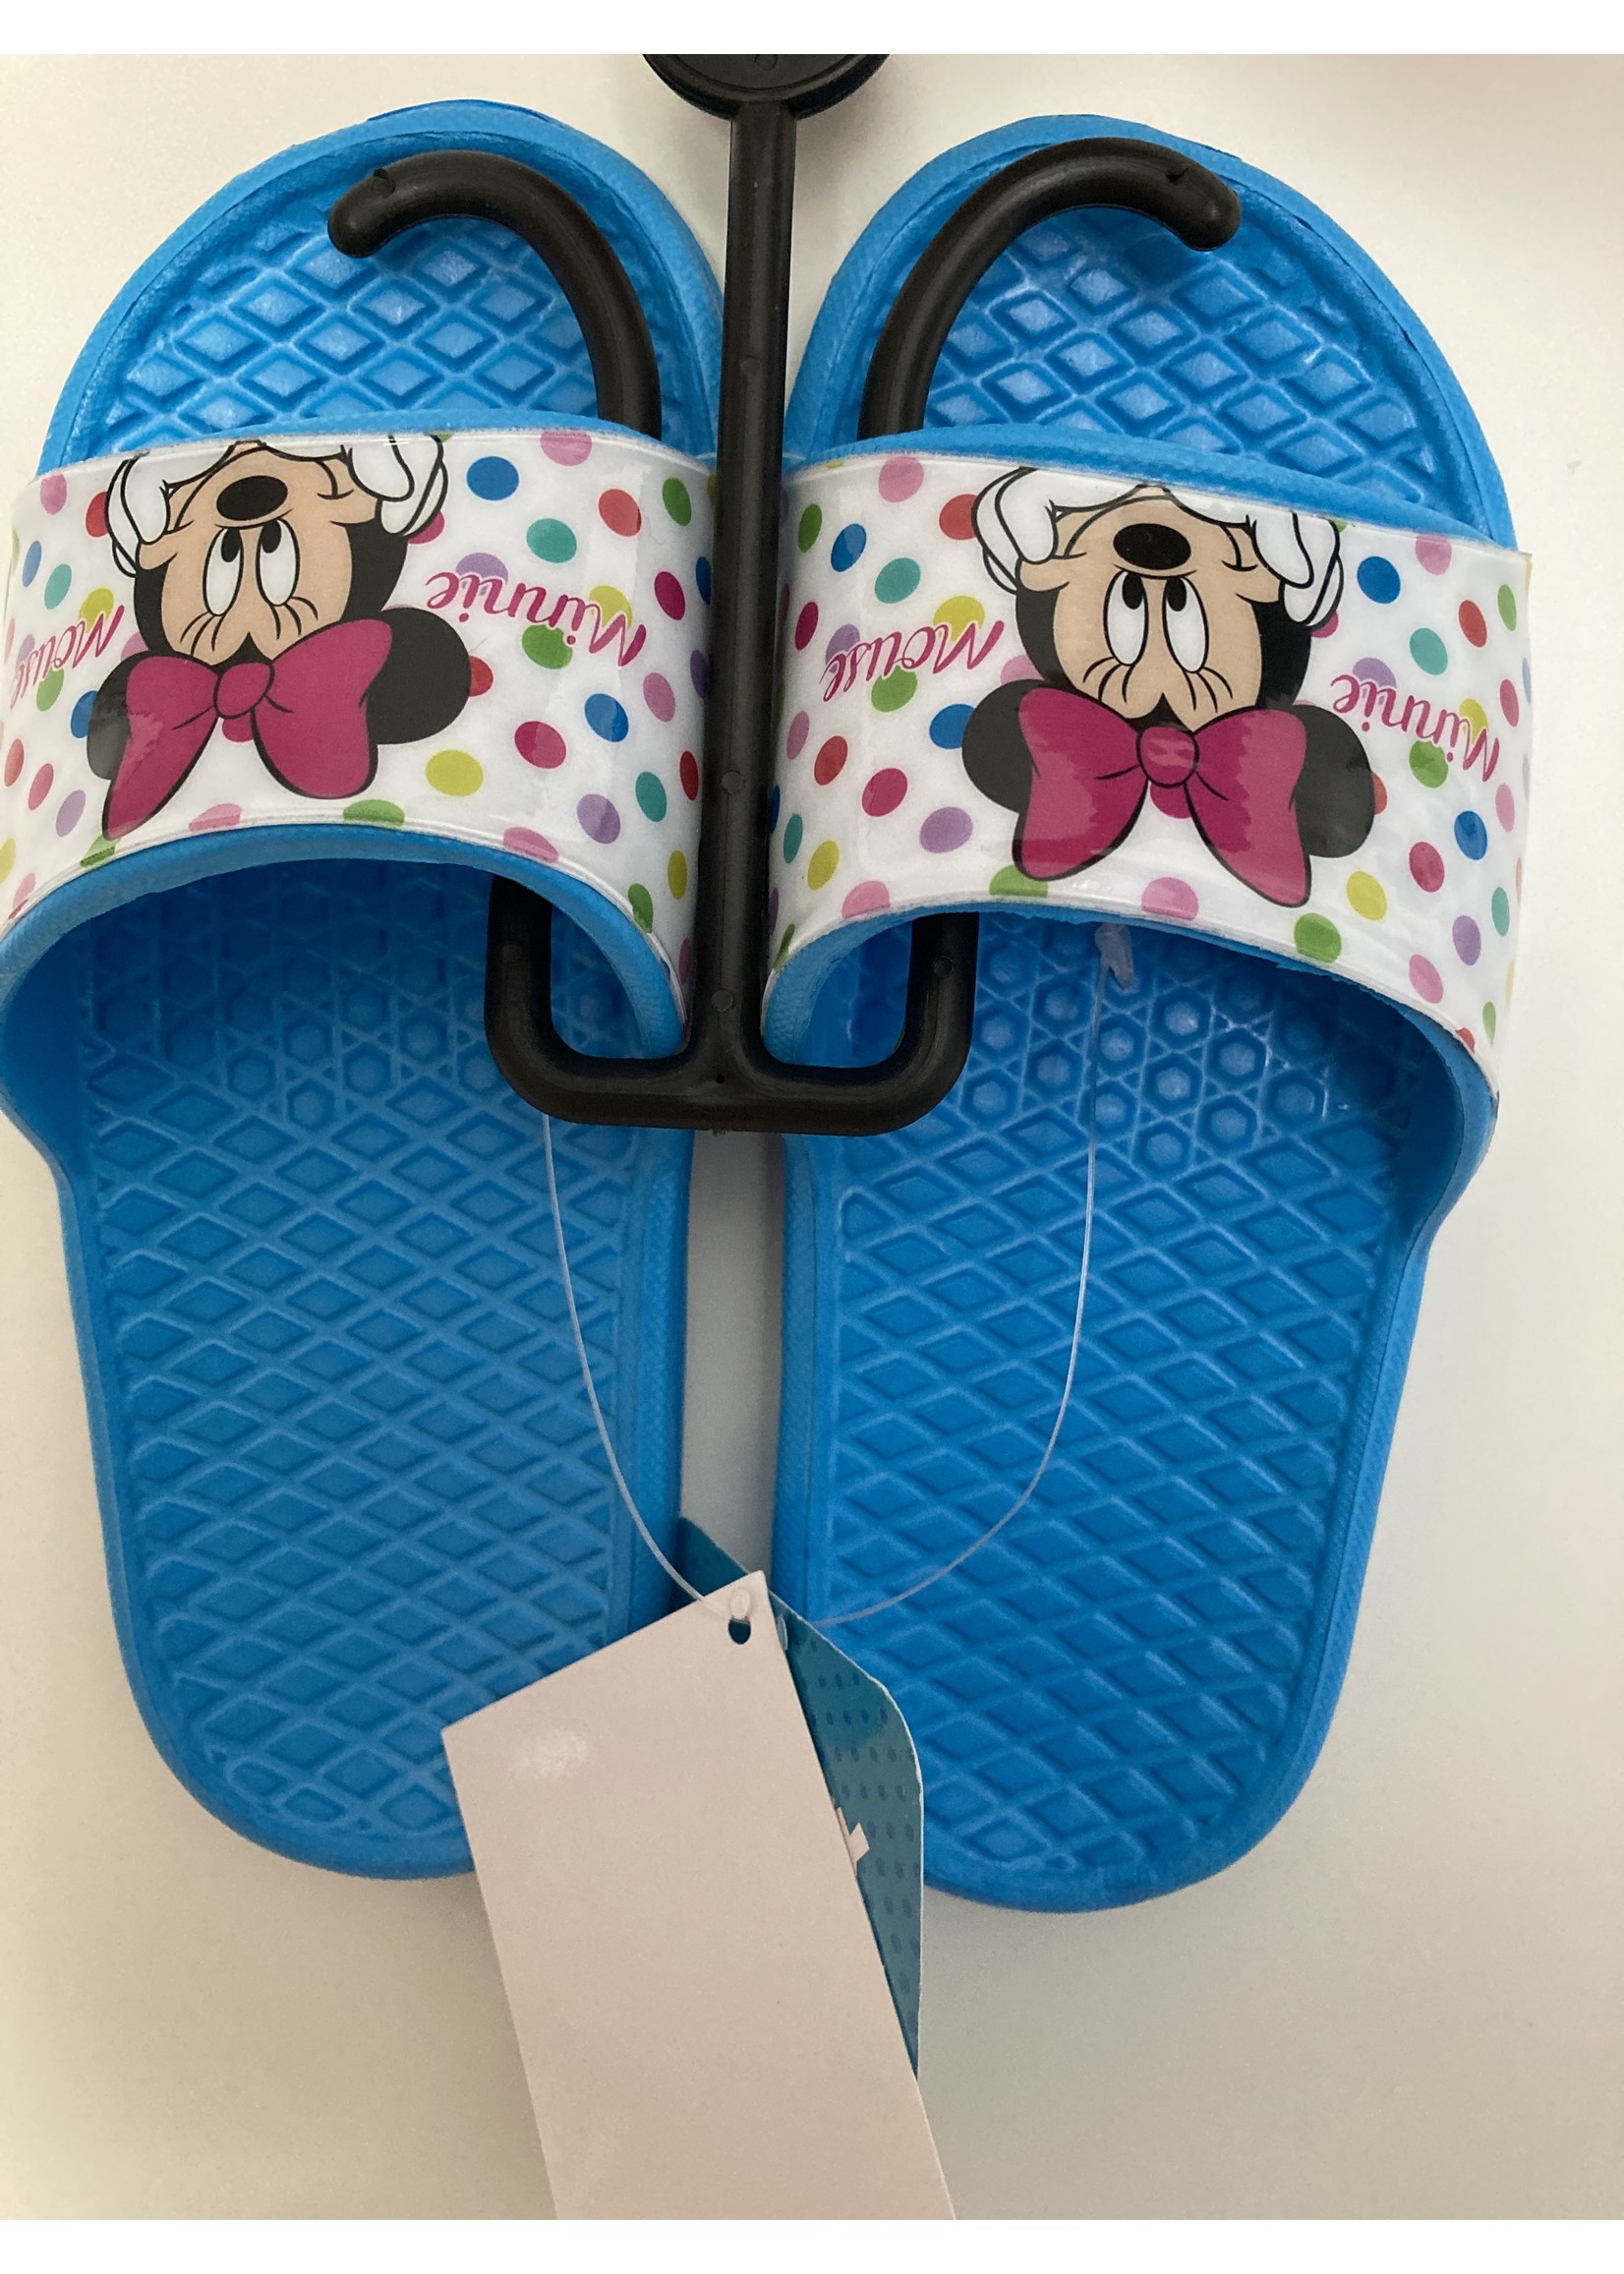 Disney Minnie Mouse badslippers van Disney blauw